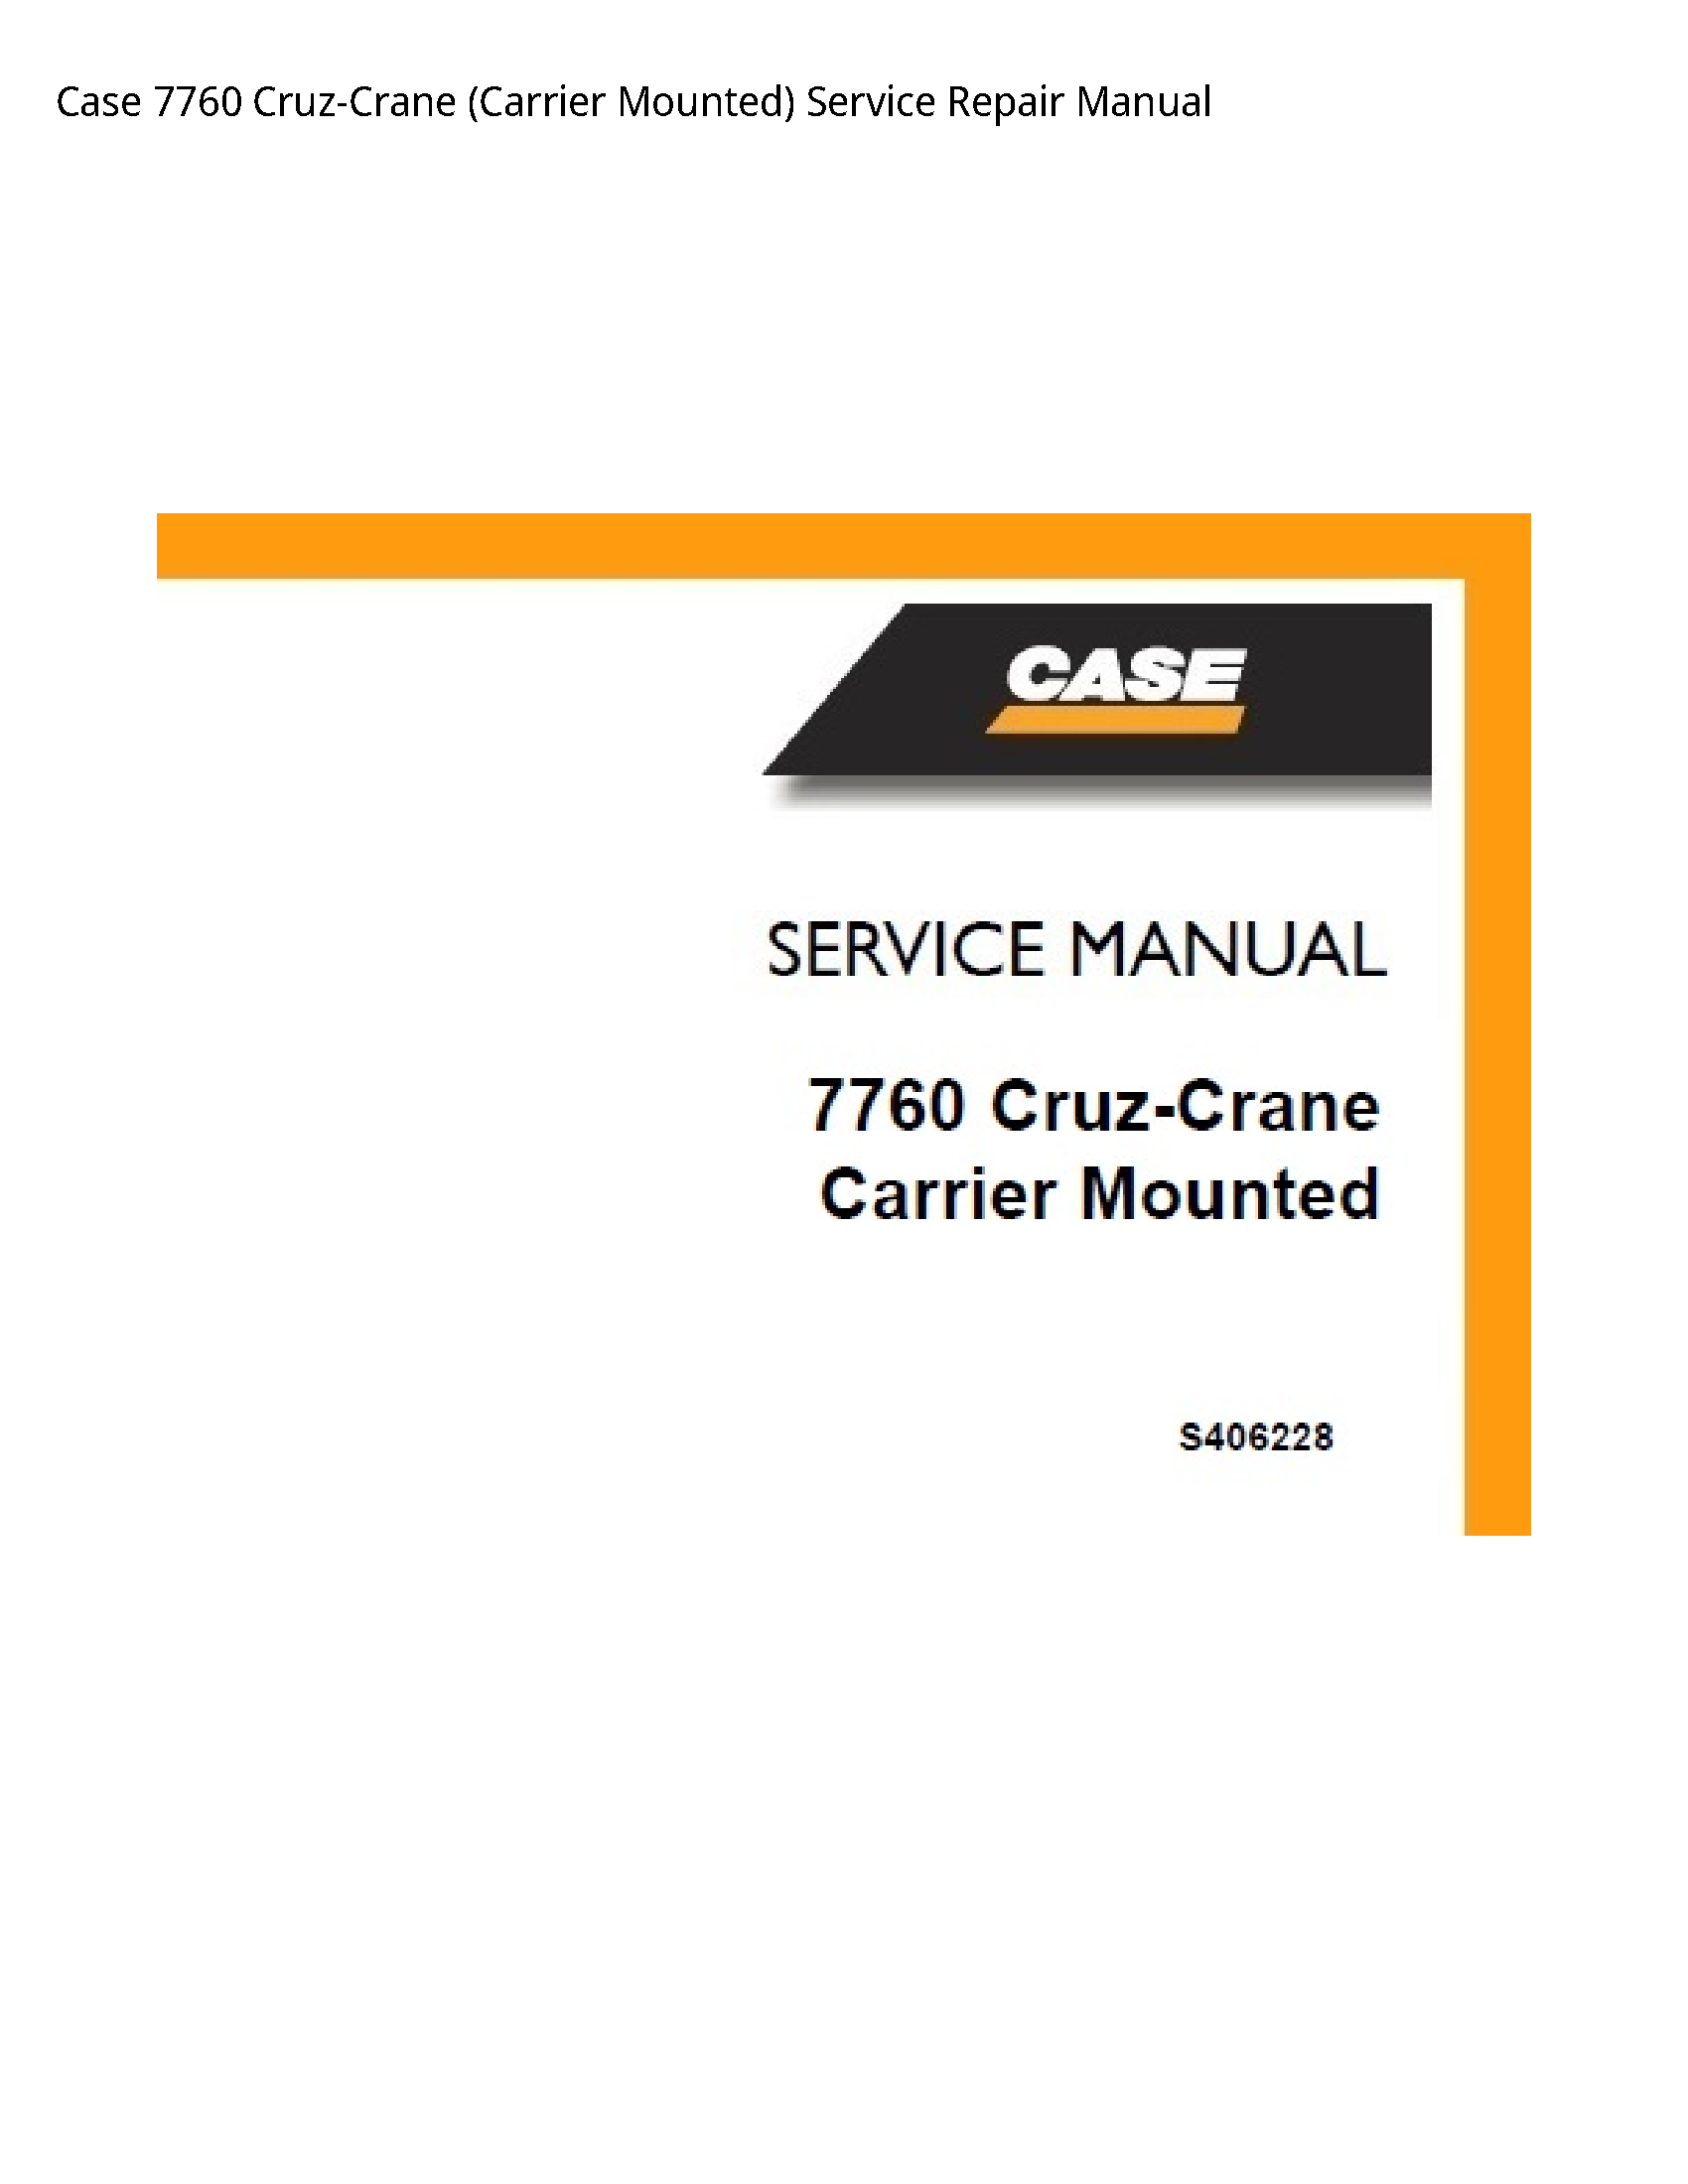 Case/Case IH 7760 Cruz-Crane (Carrier Mounted) manual